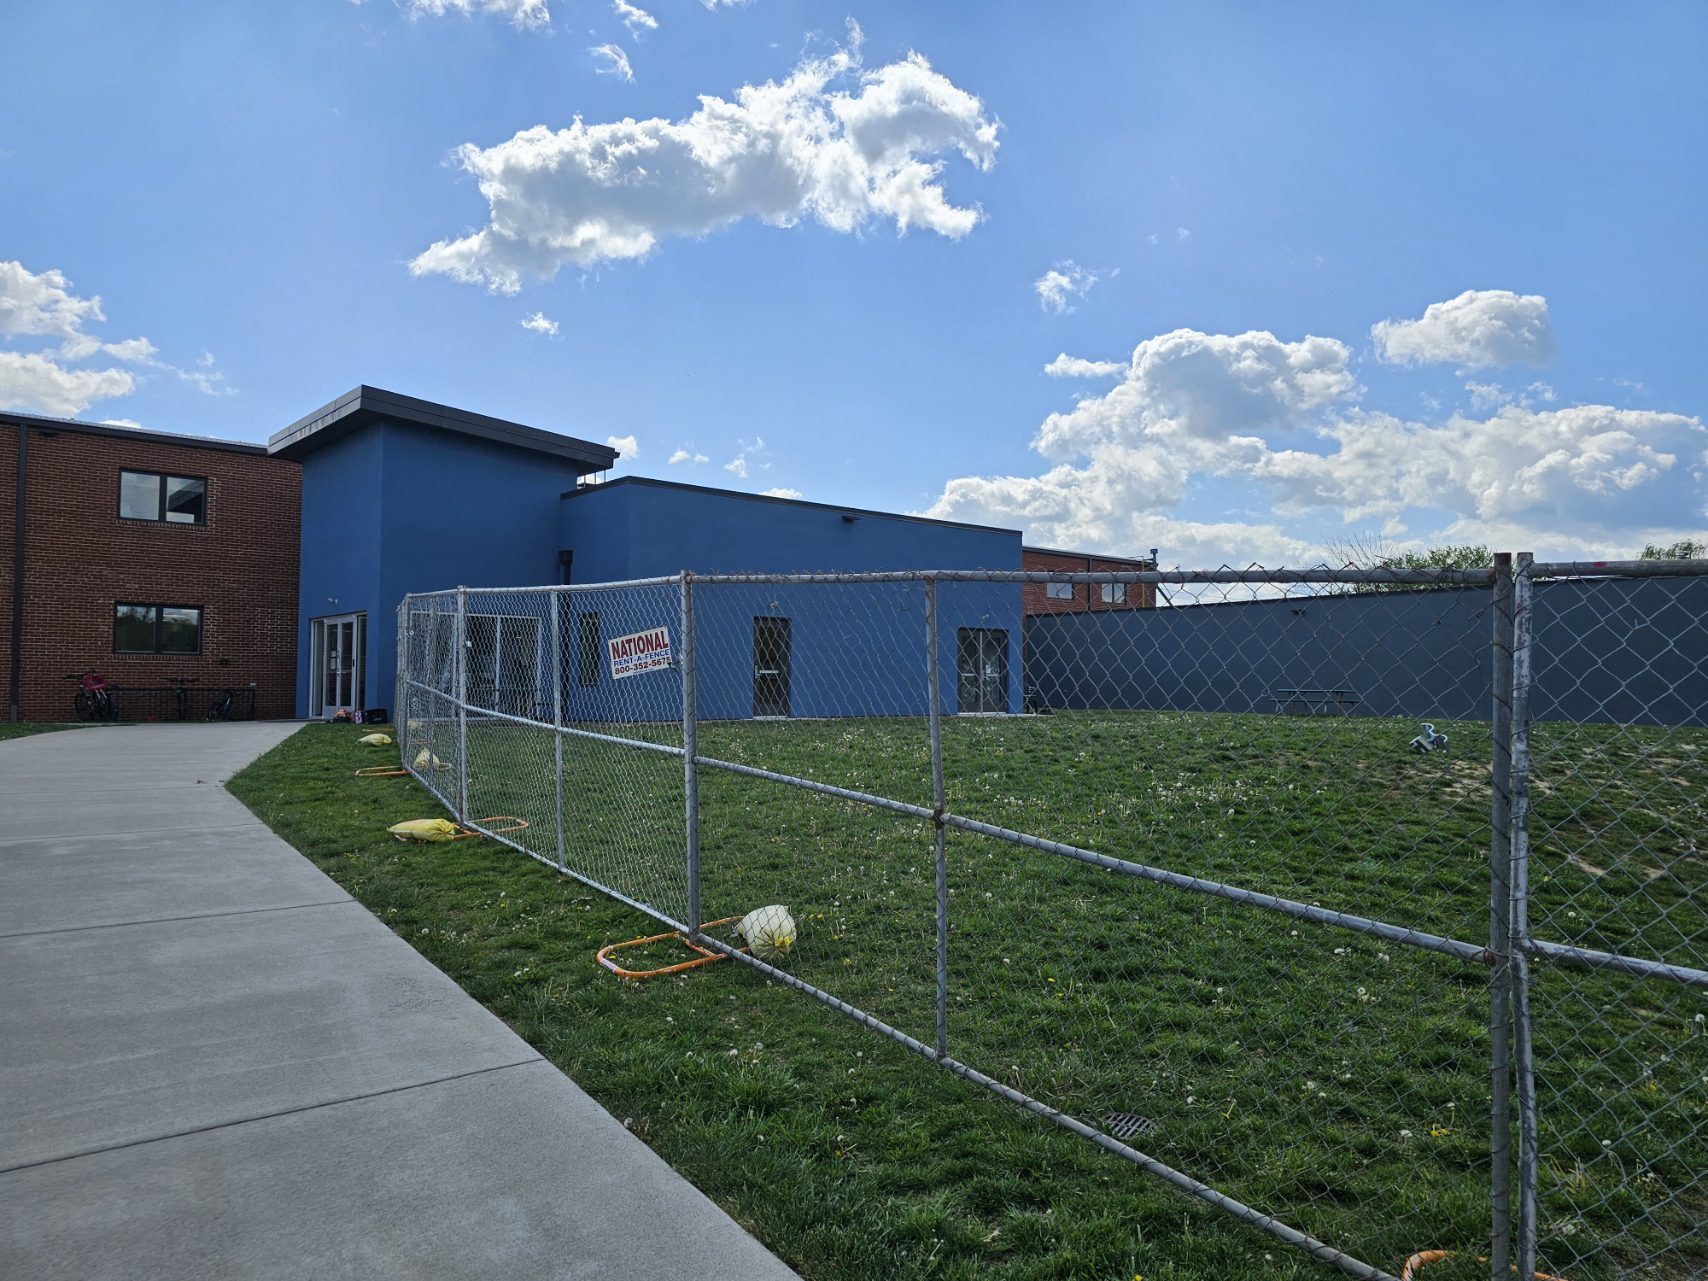 Eastern mennonite Elementary School